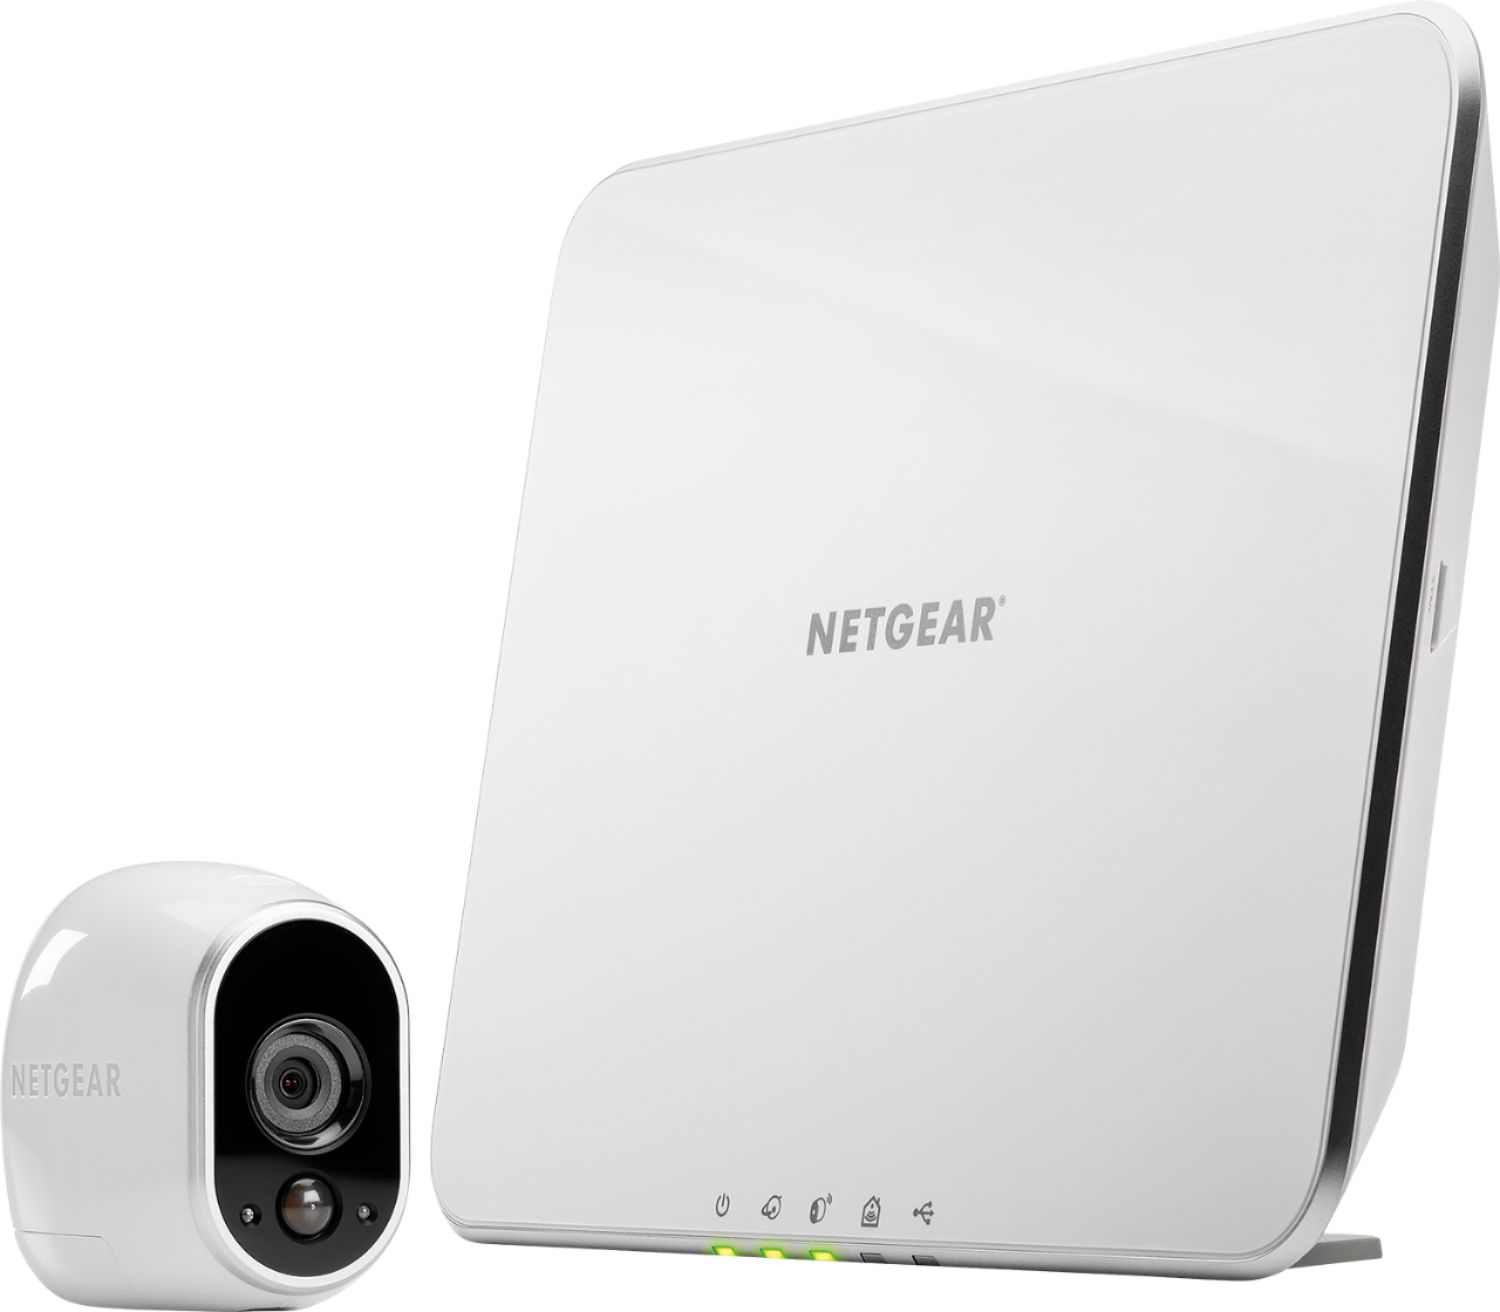 Netgear Arlo Smart Home Security review: Netgear's Arlo defies